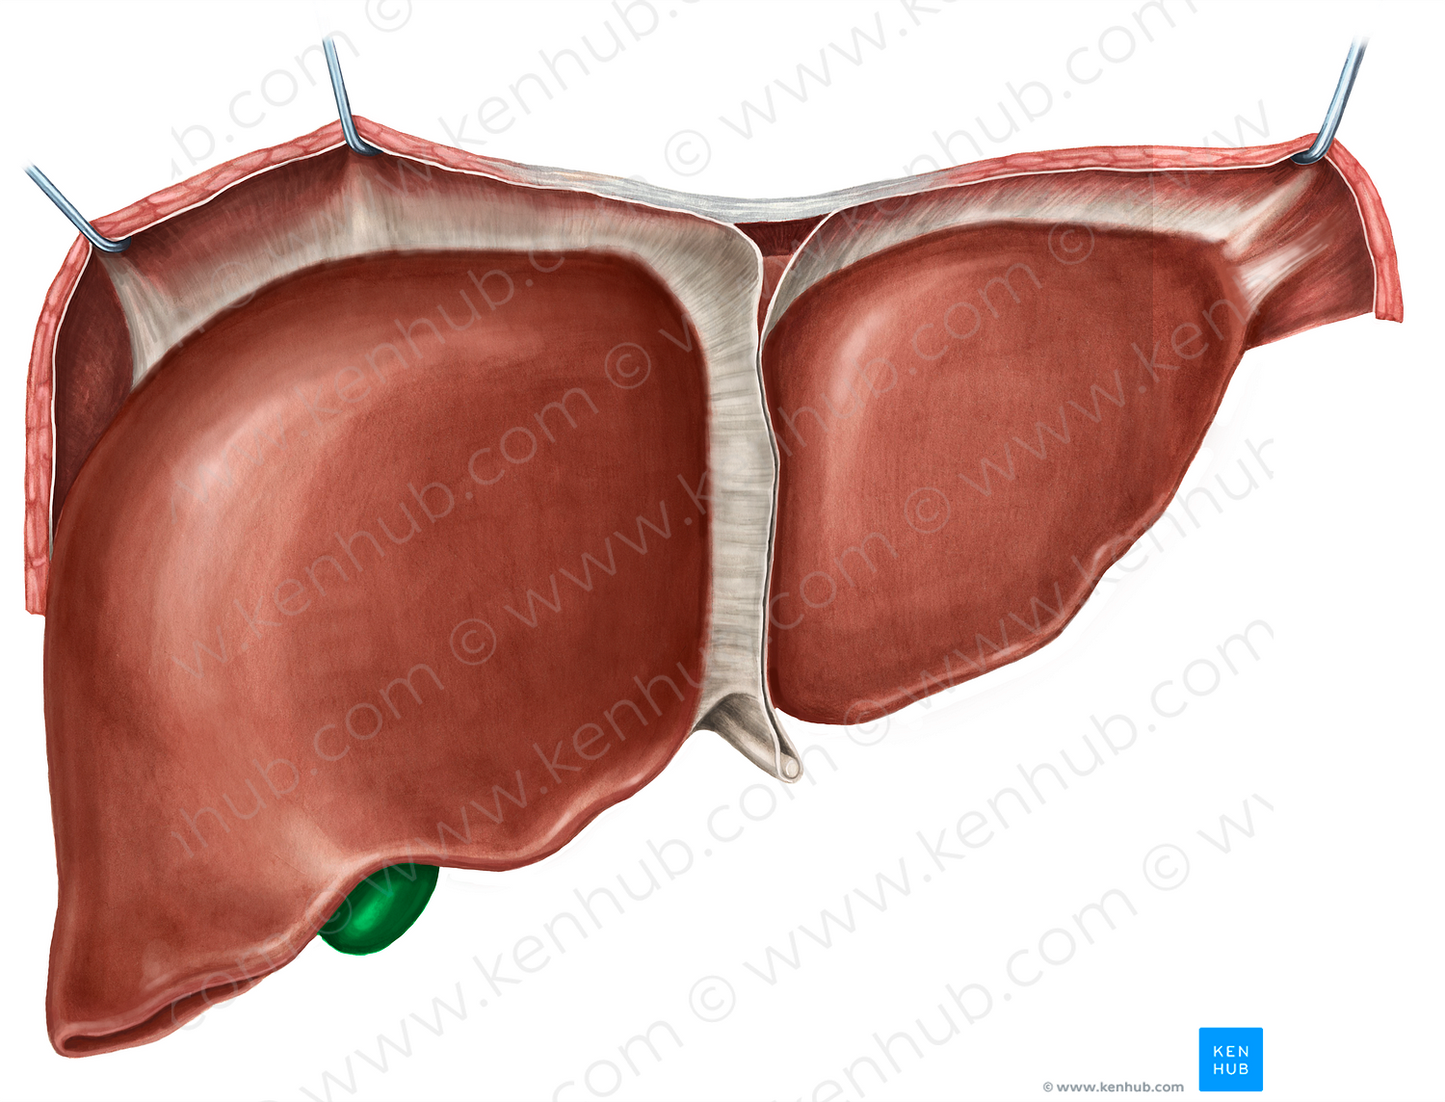 Fundus of gallbladder (#3932)